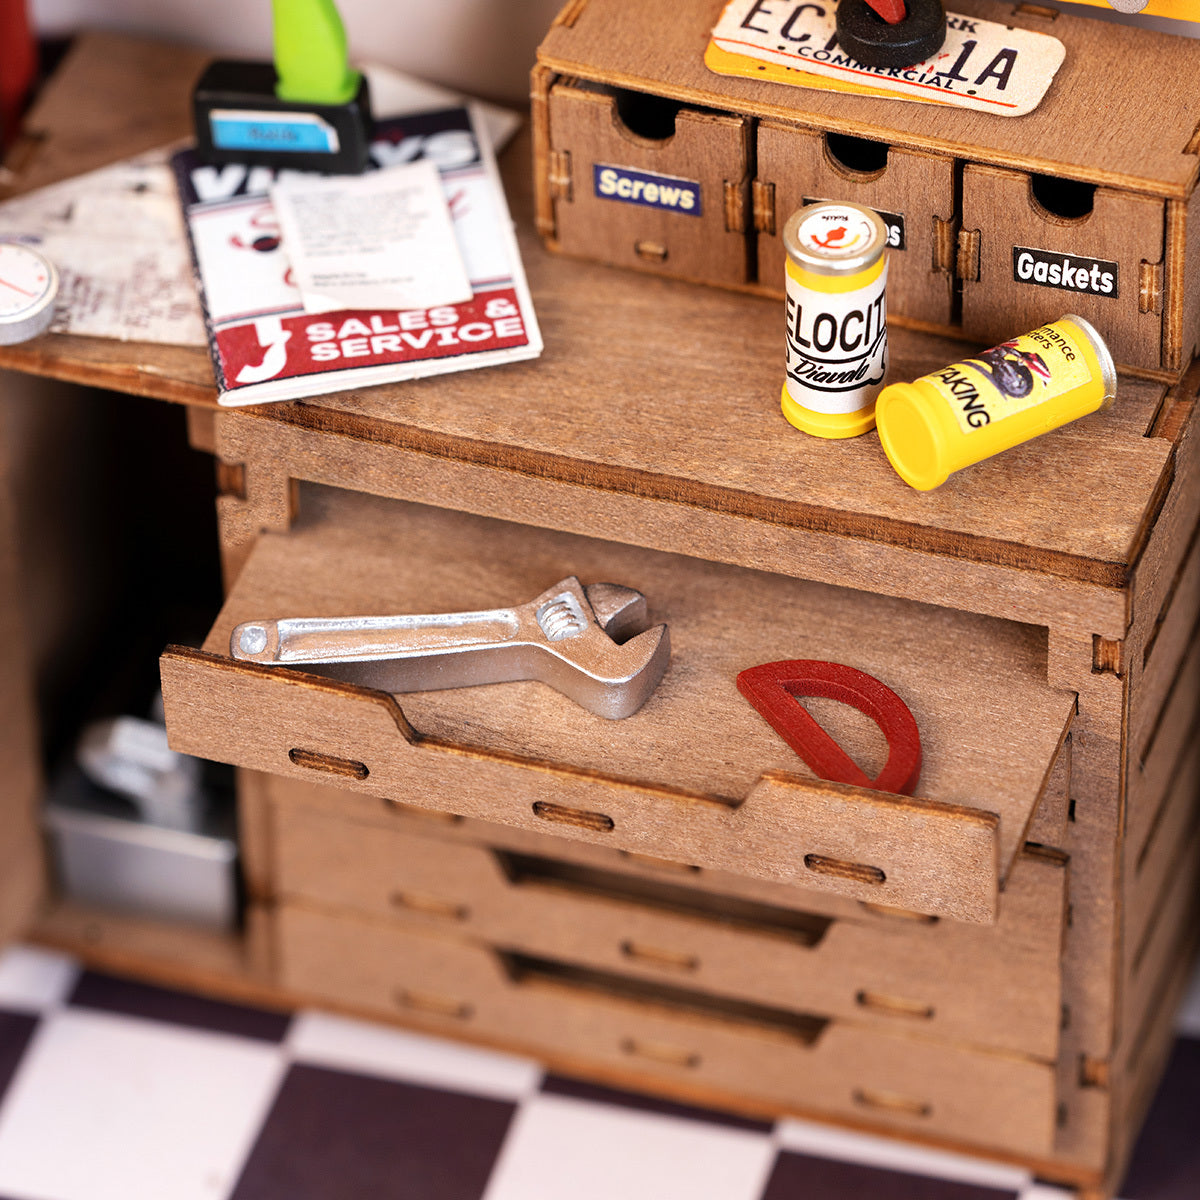 Garage Workshop DIY Dollhouse Miniature Kit Rolife Miniatures Car Garage Miniatures